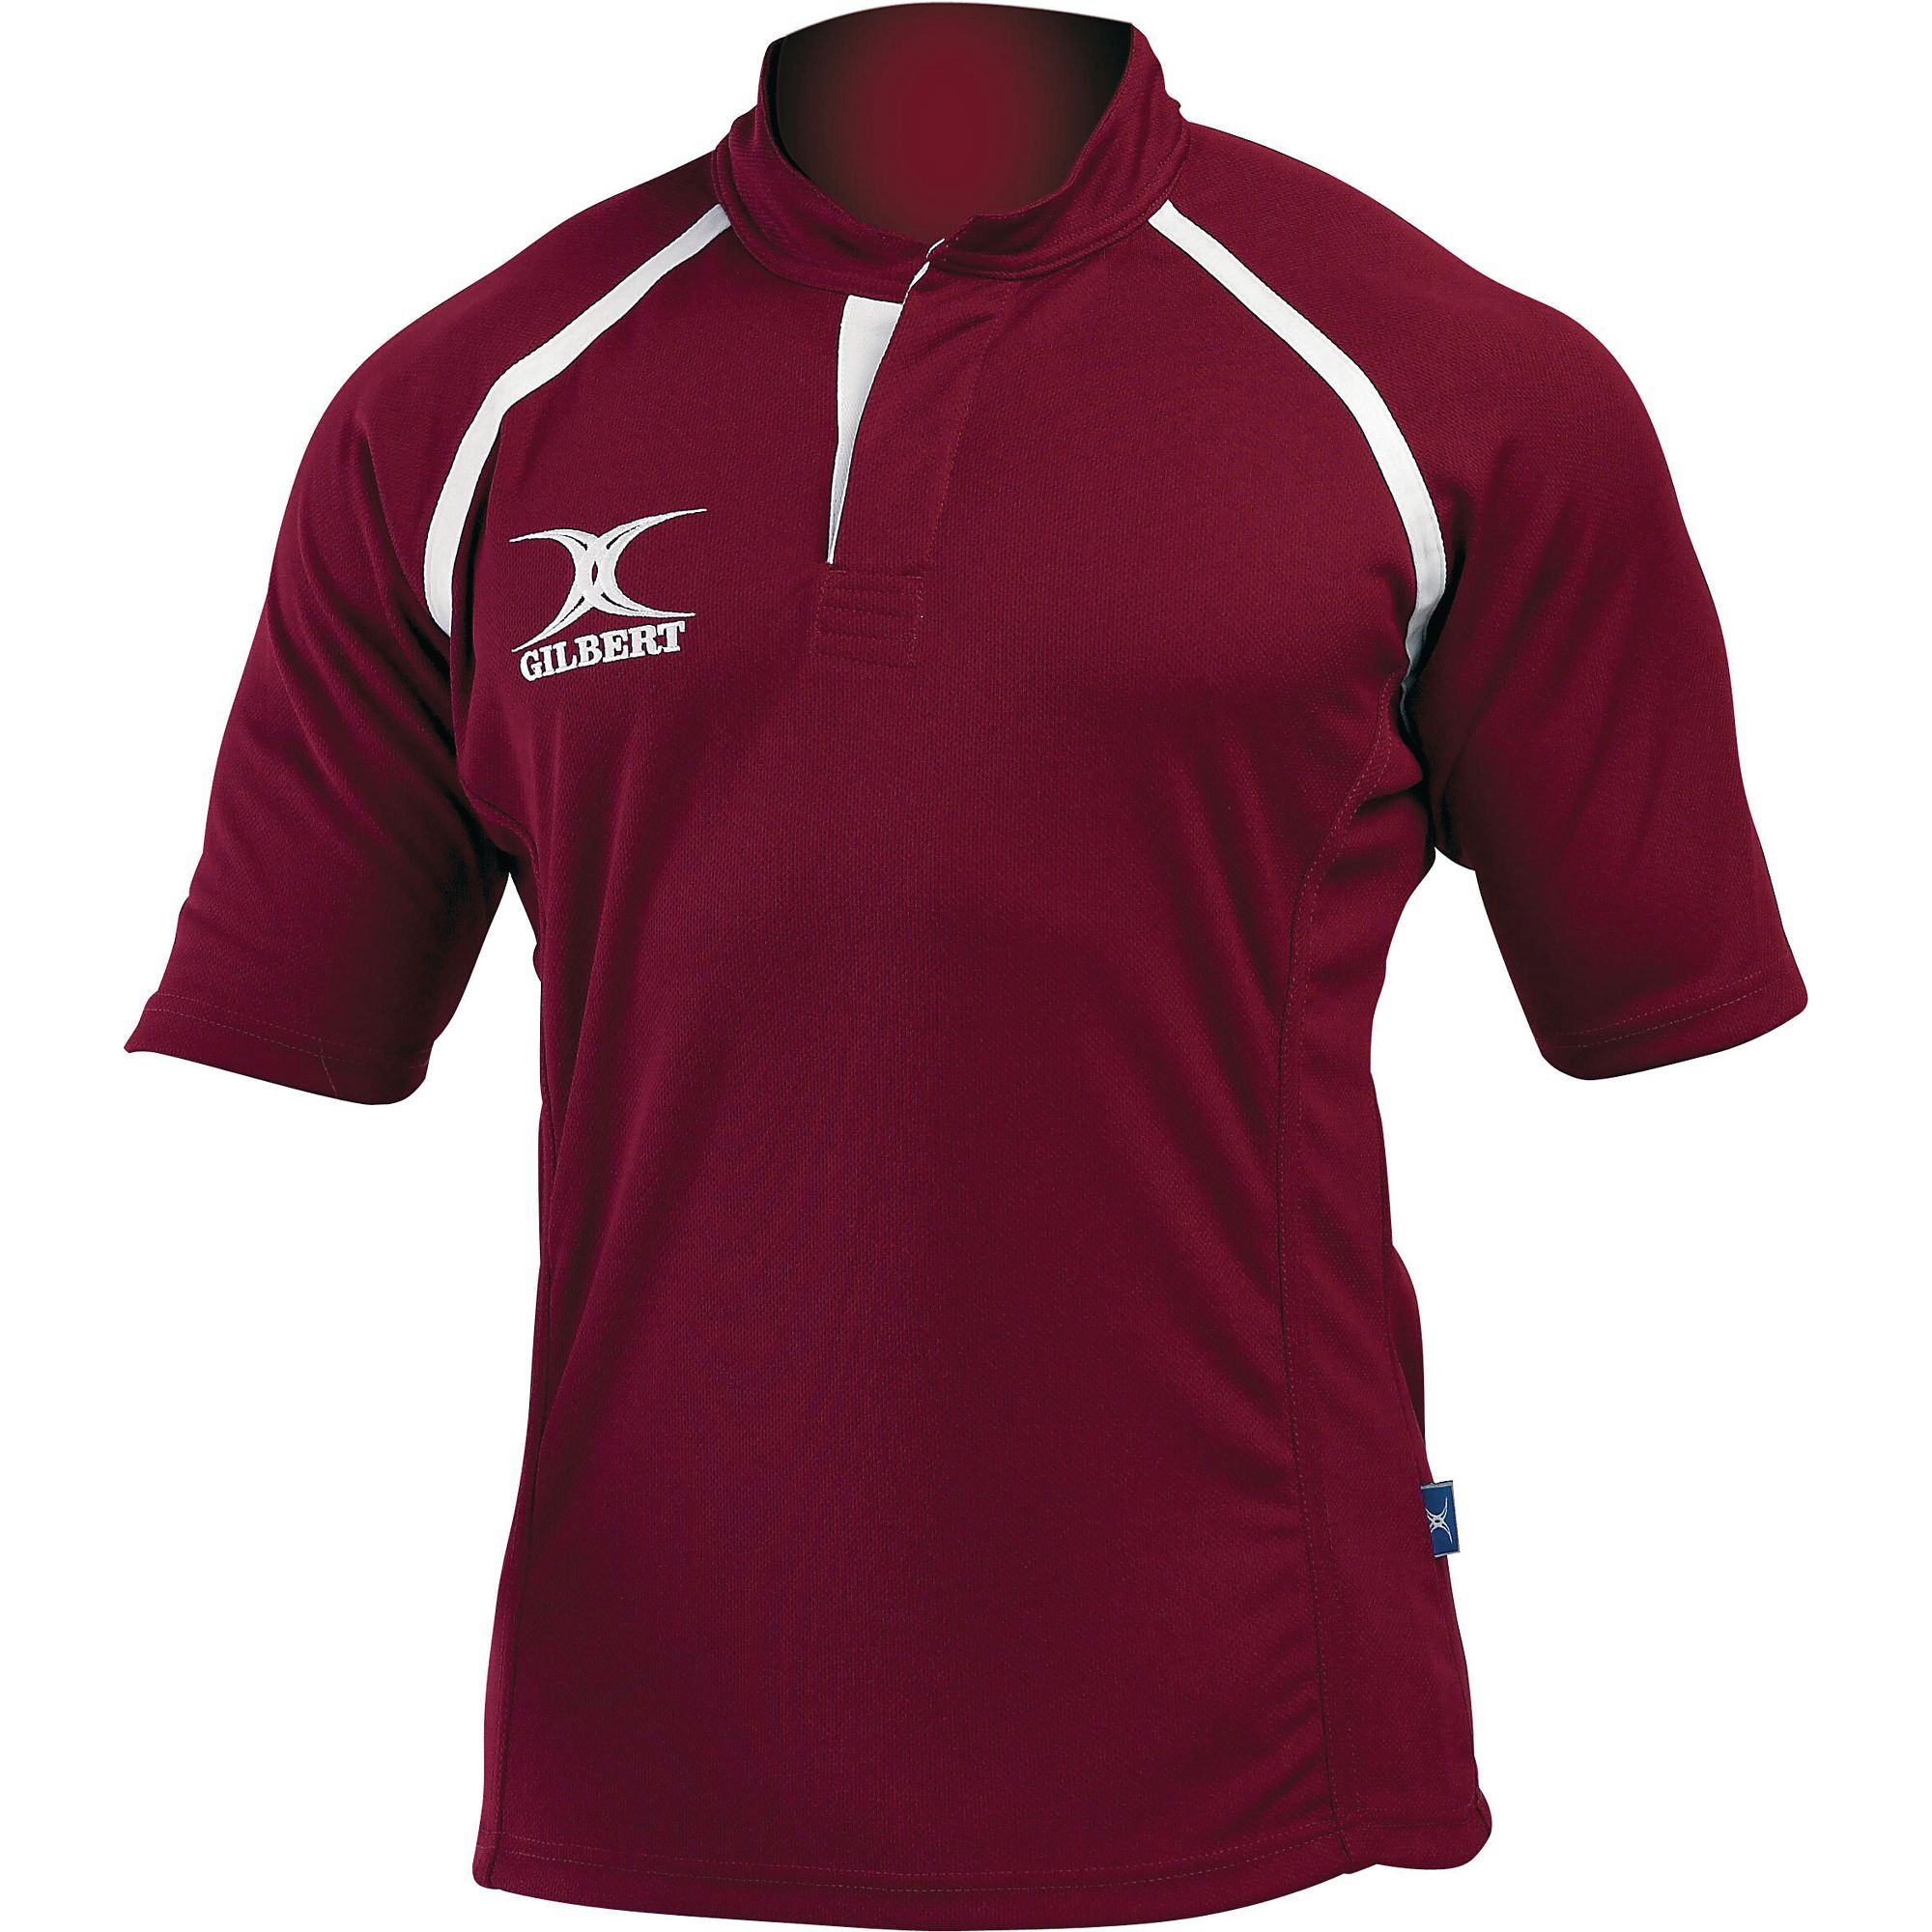 Gilbert Plain Rugby Shirt 32in Maroon